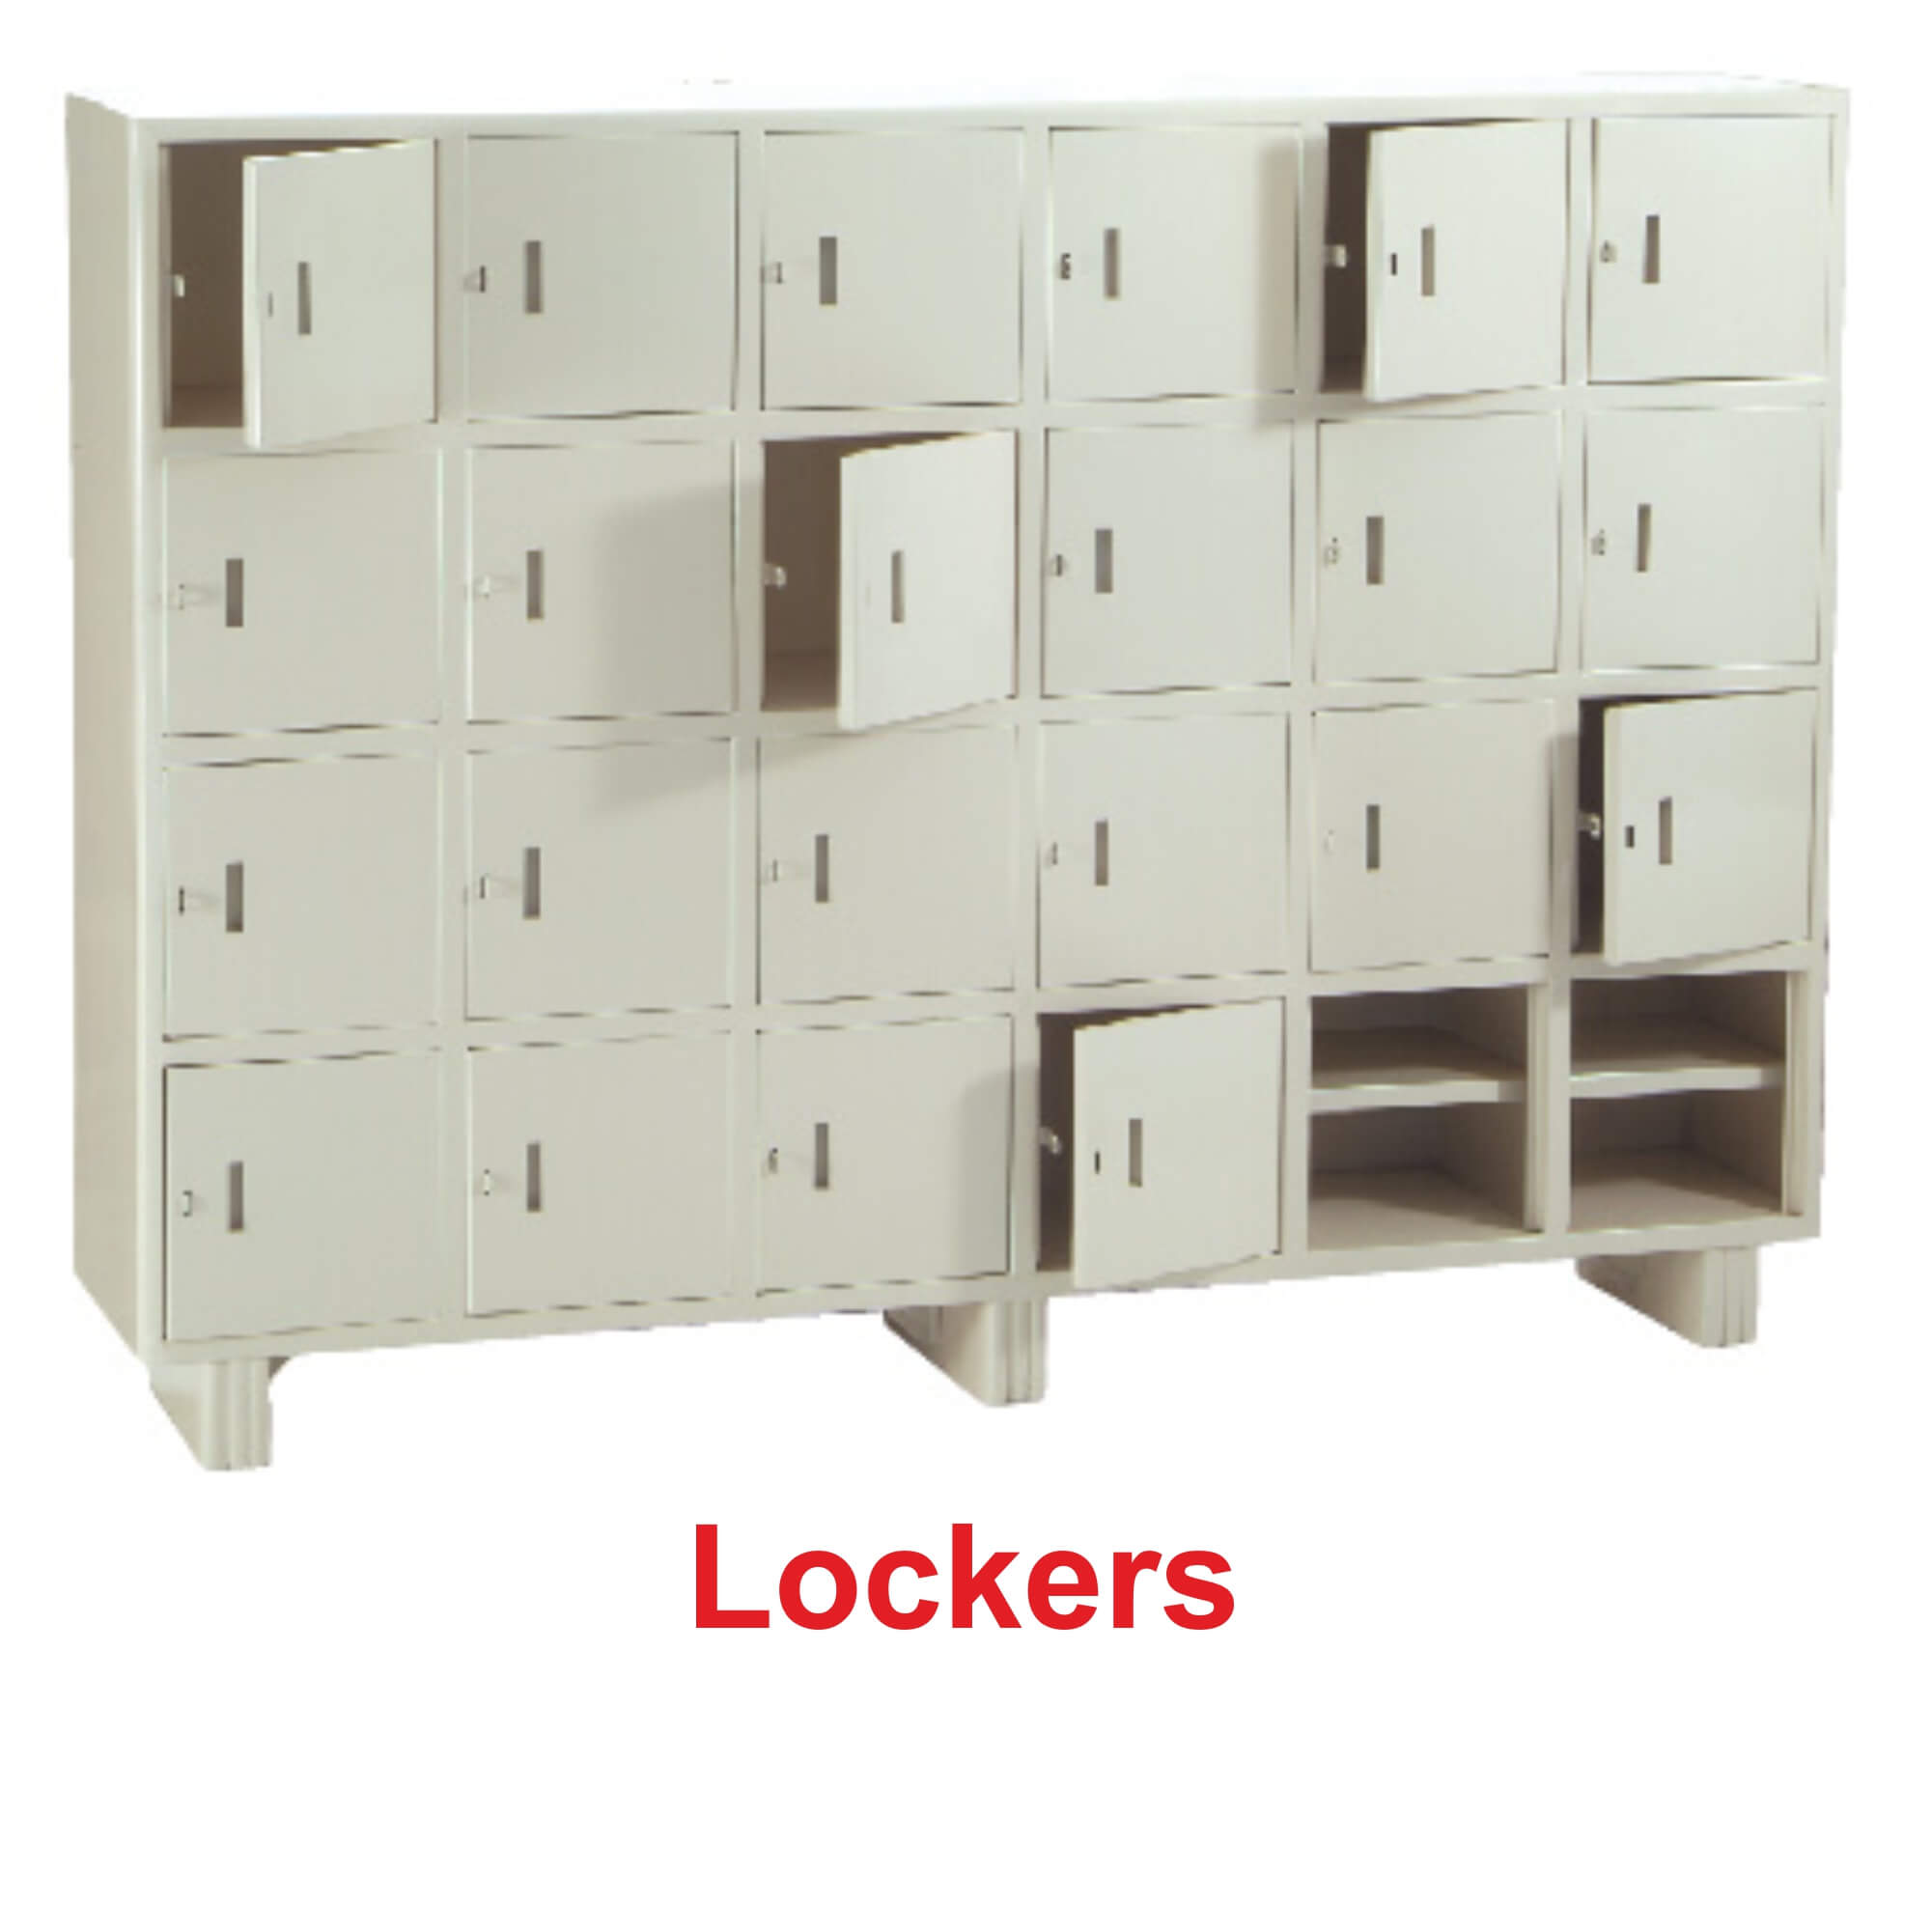 Lockers Manufacturer in India